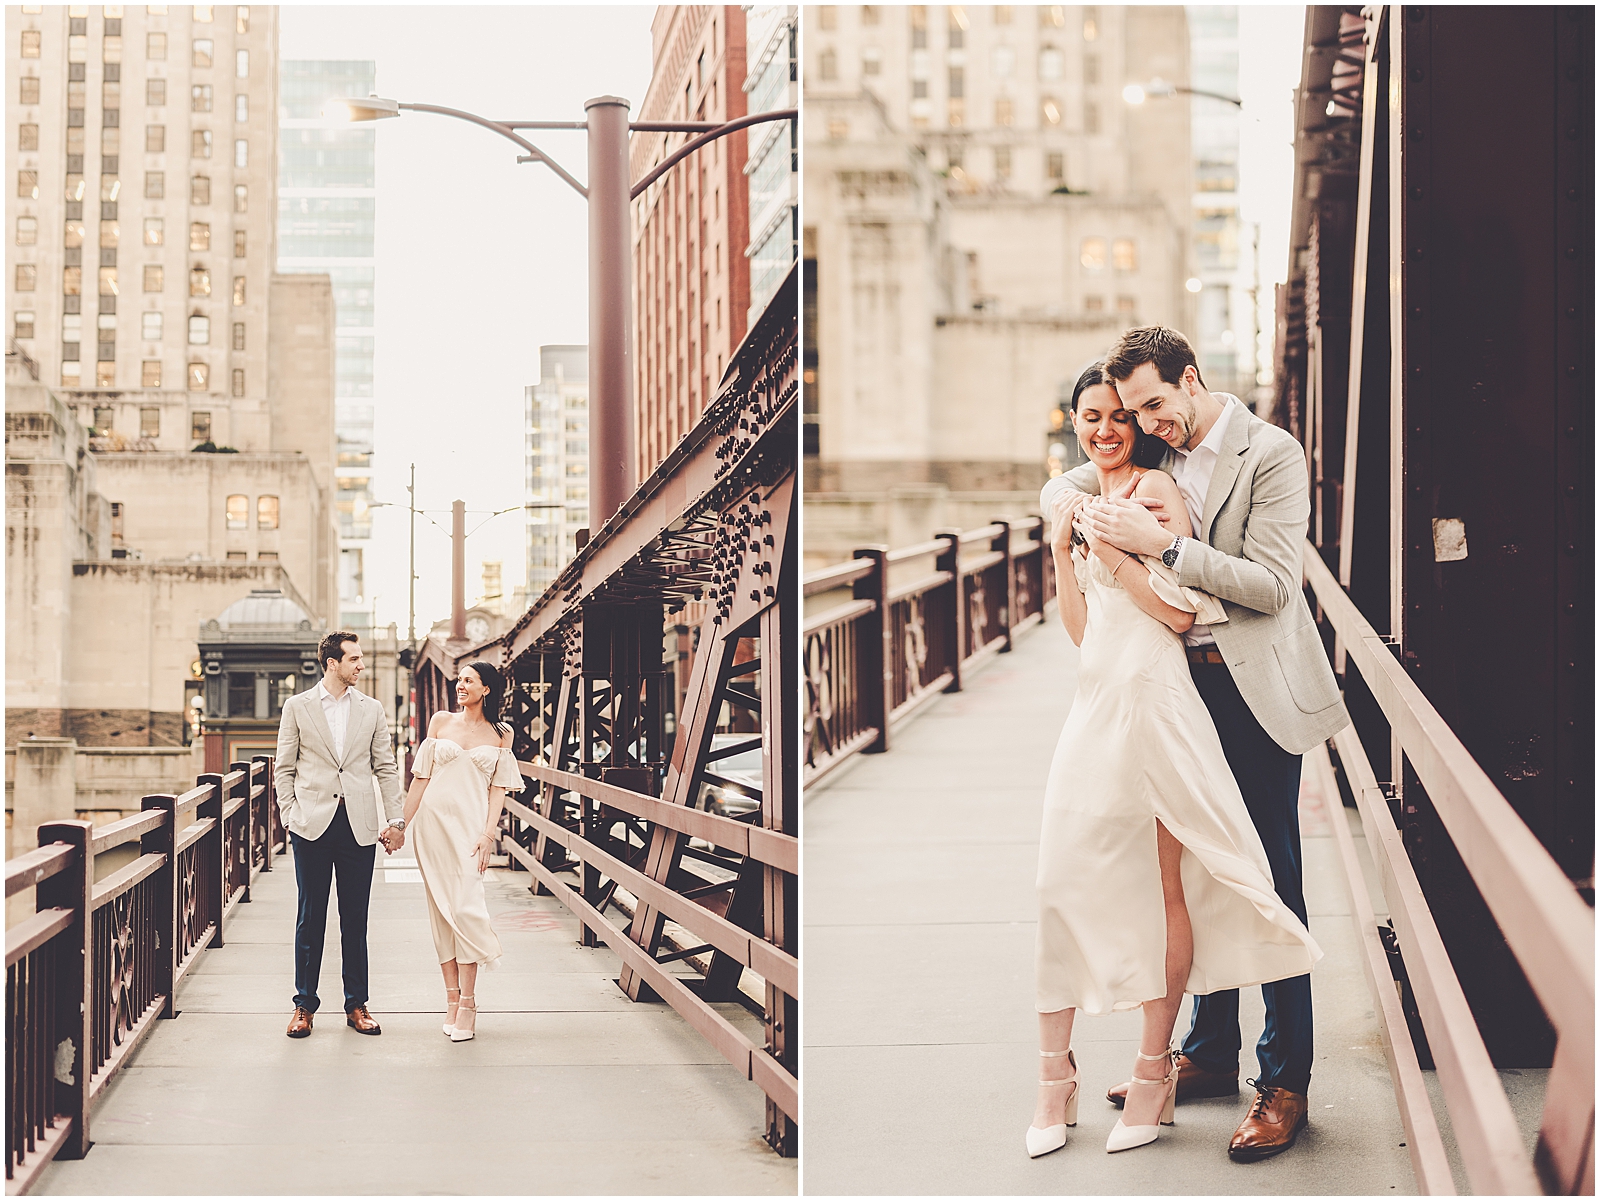 Delaney and Corey's Lyric Opera & Chicago River bridge engagement photos in Chicago with Chicagoland wedding photographer Kara Evans Photographer.